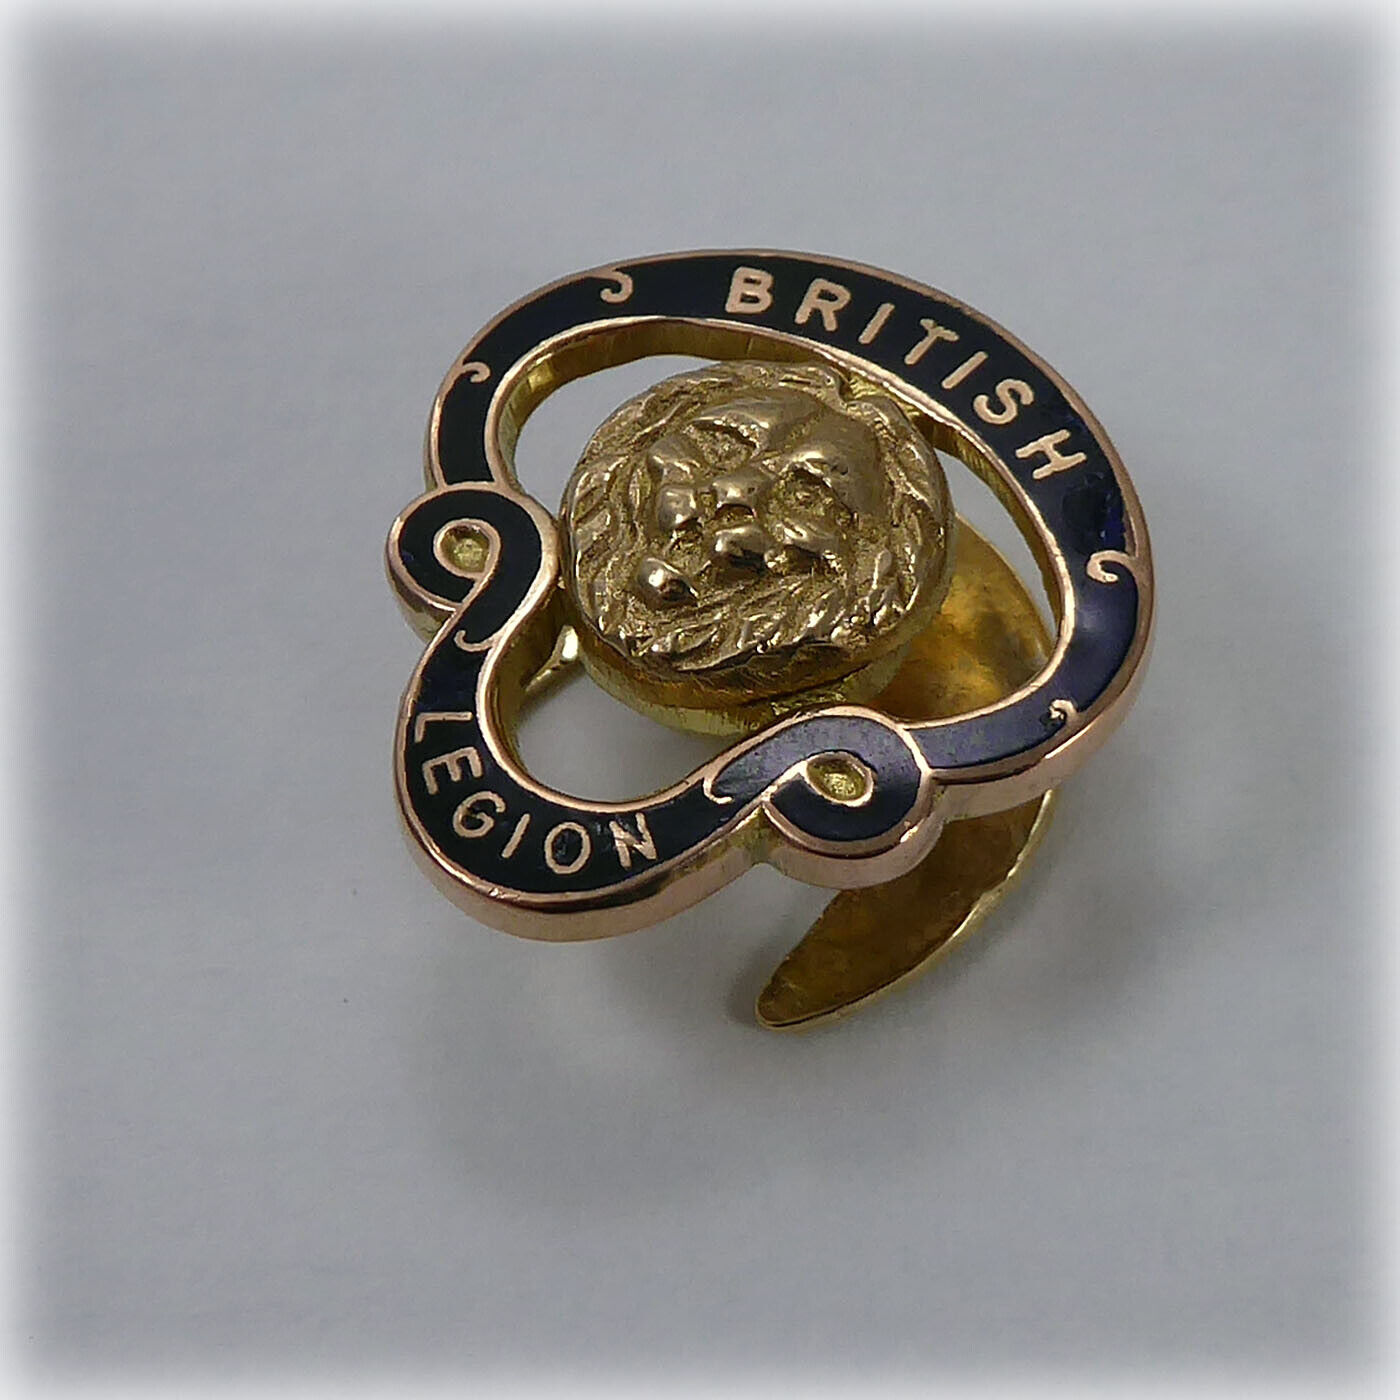 Vintage 9ct Gold British Legion Lapel Badge, hallmarked 1957, 5.5gms